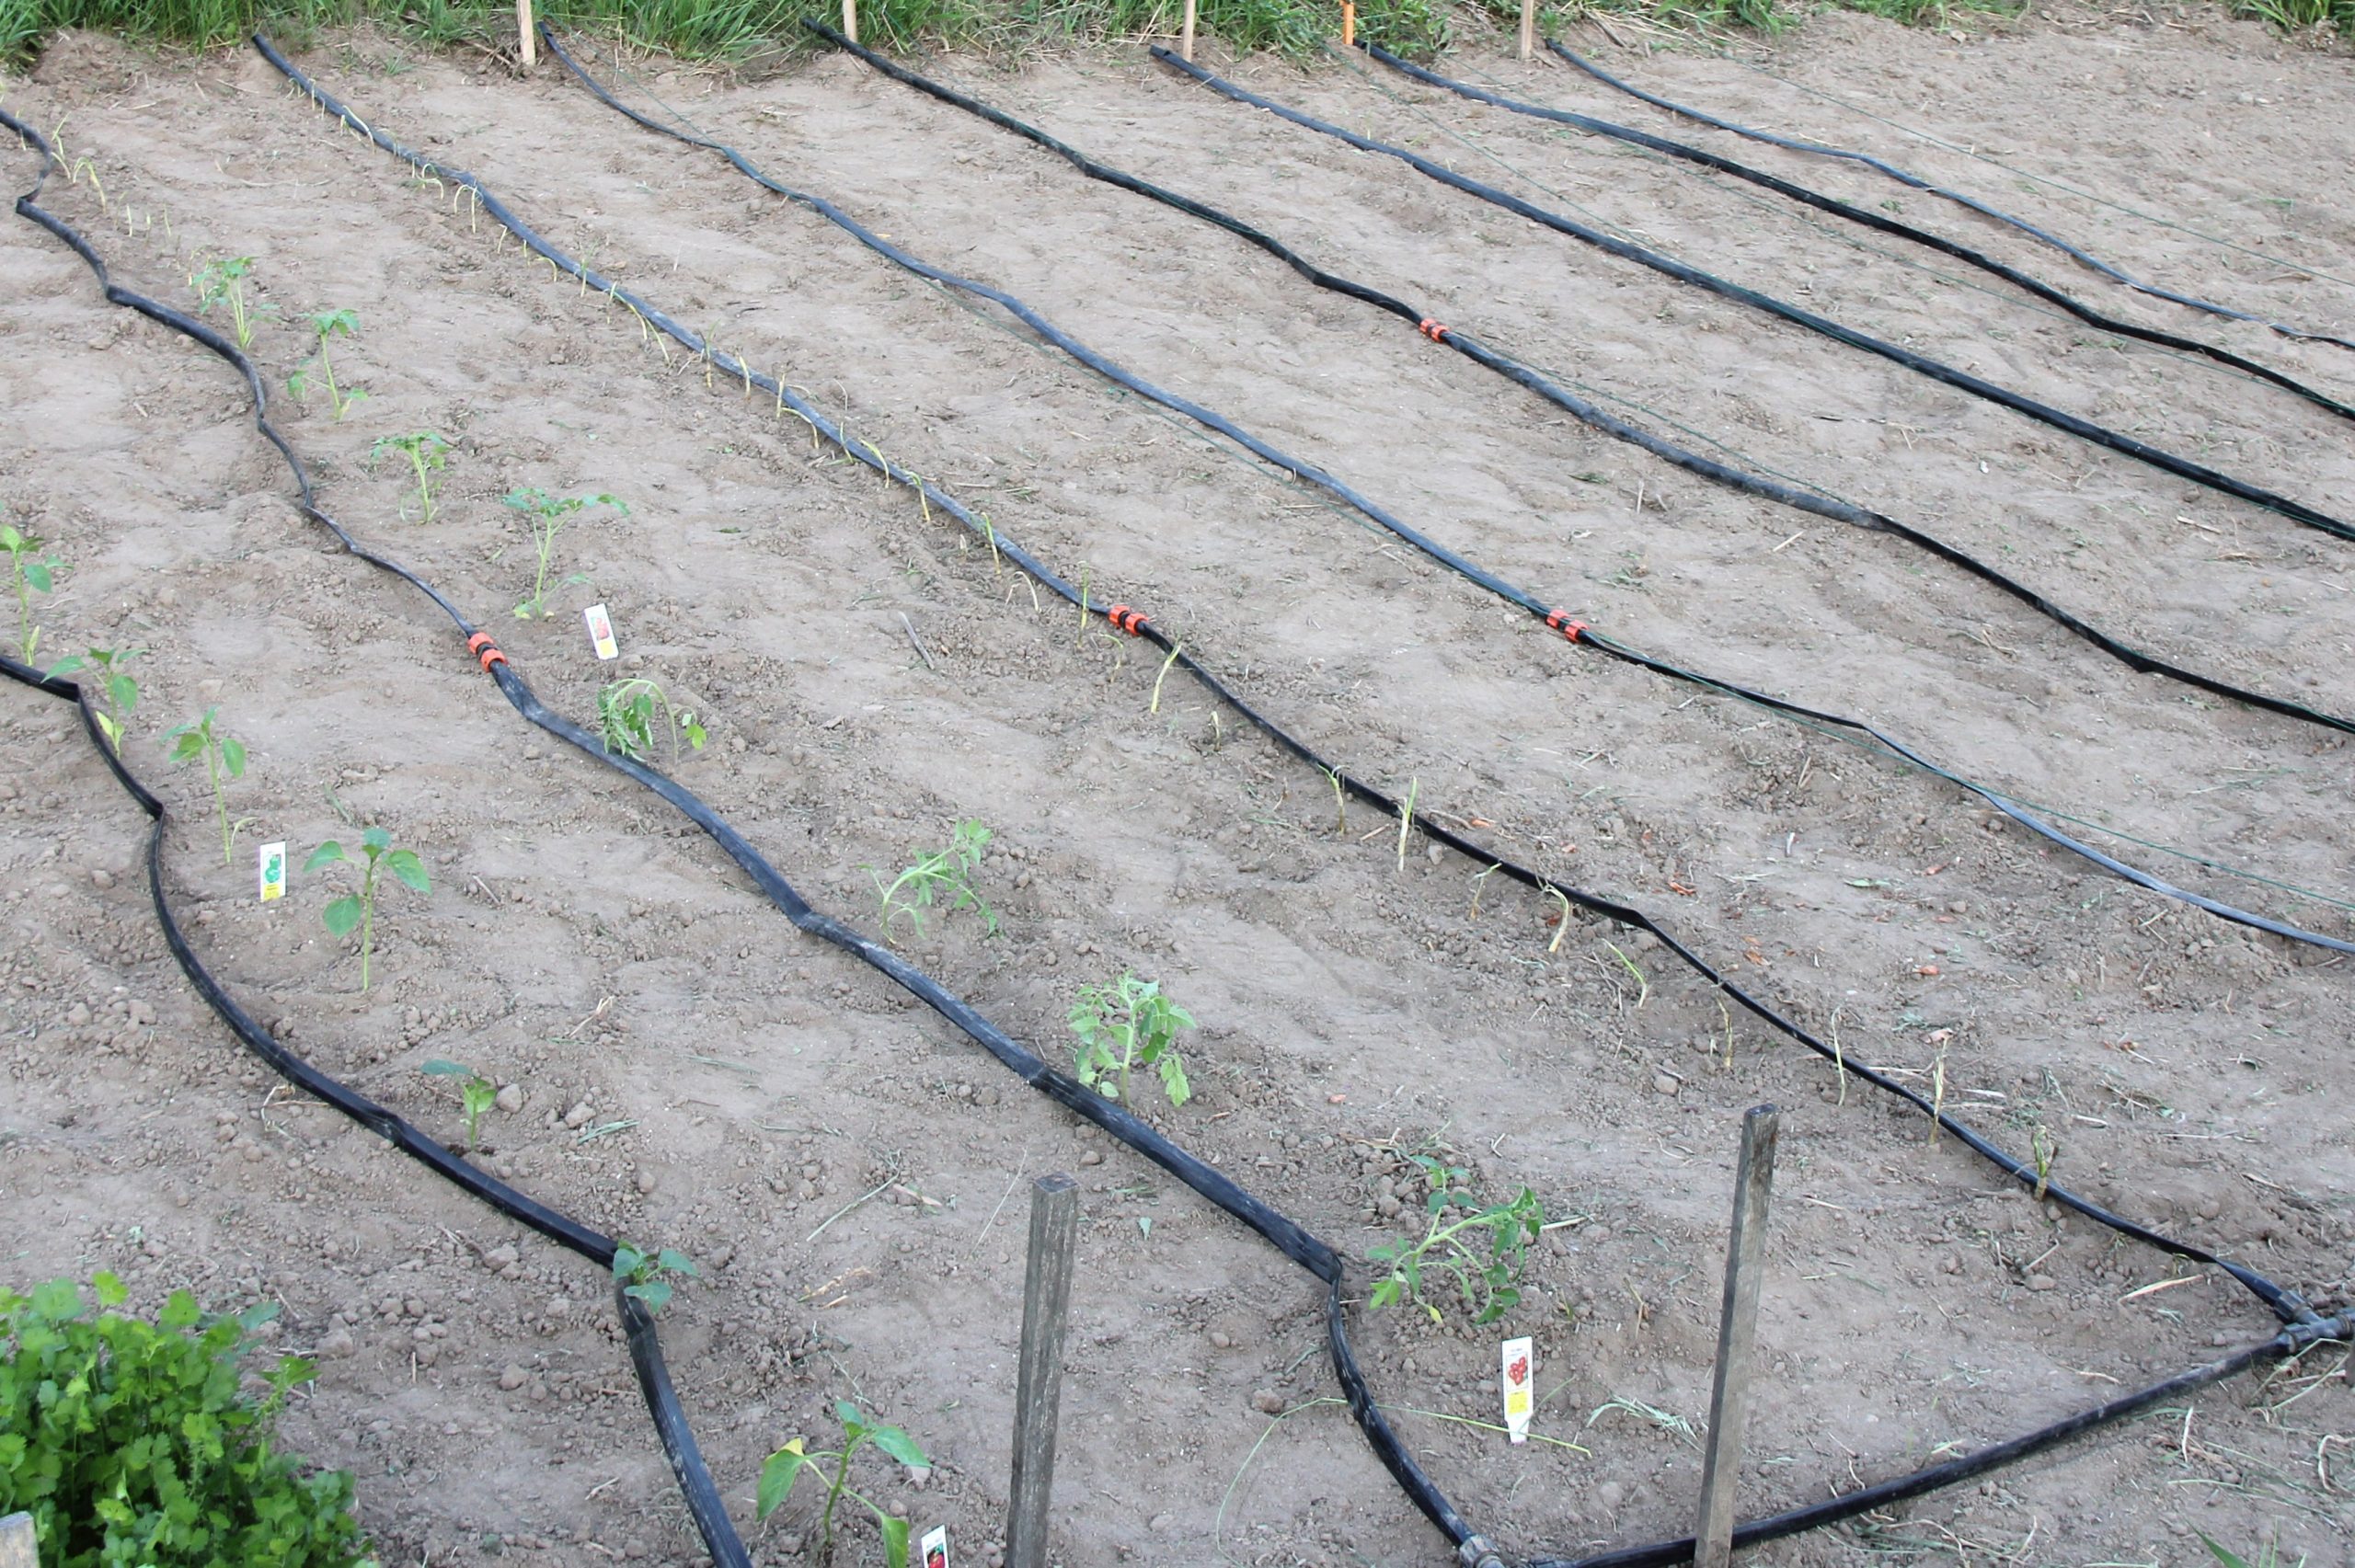 drip irrigation kit for 1000 plants